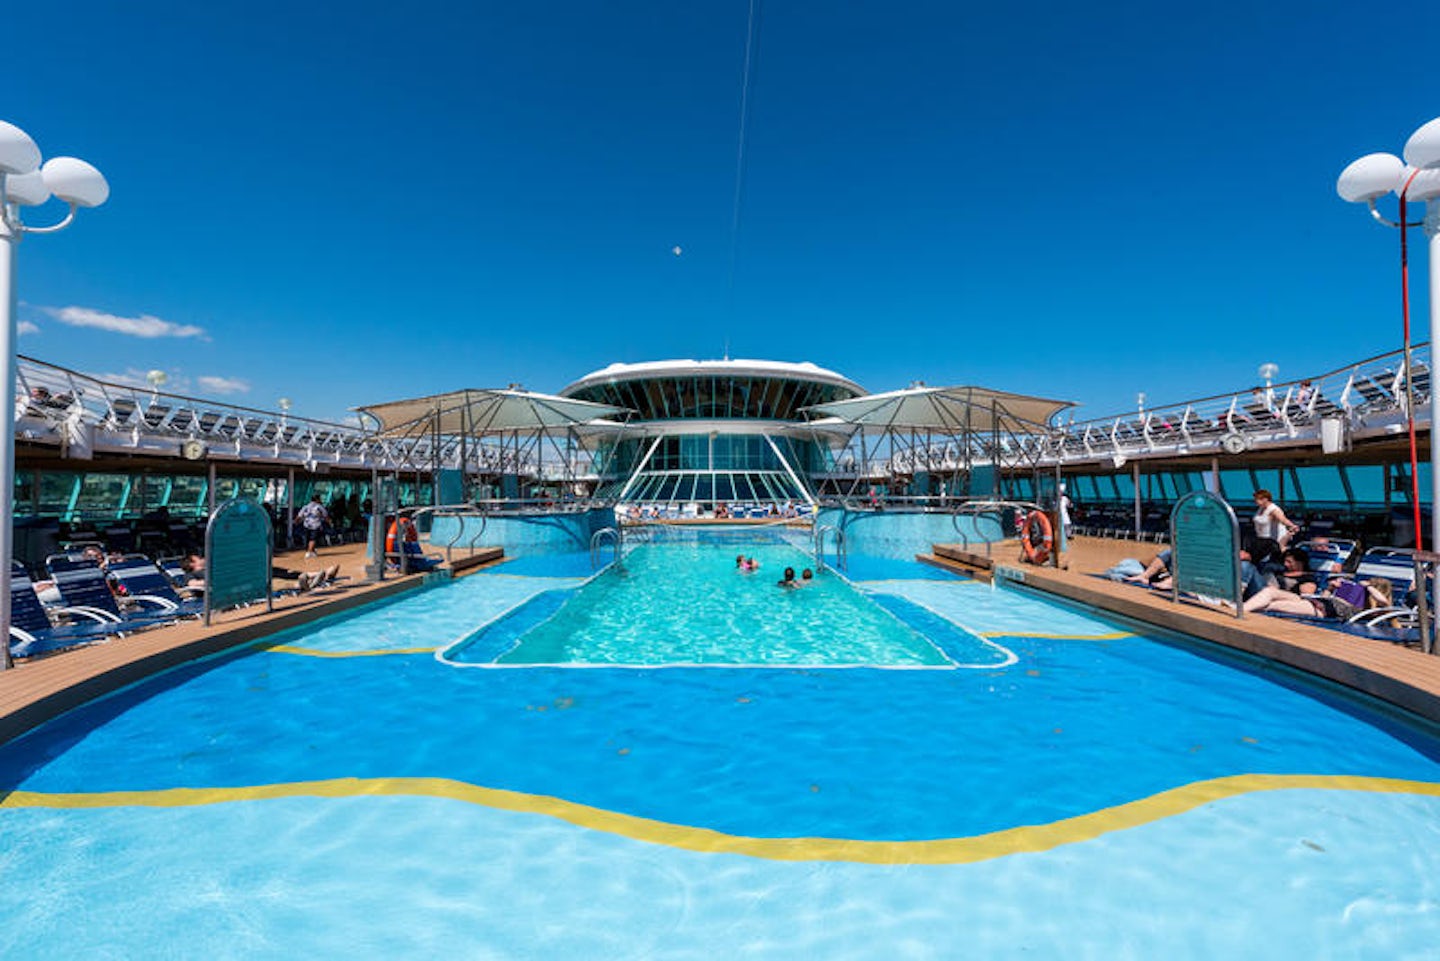 The Main Pool on Rhapsody of the Seas